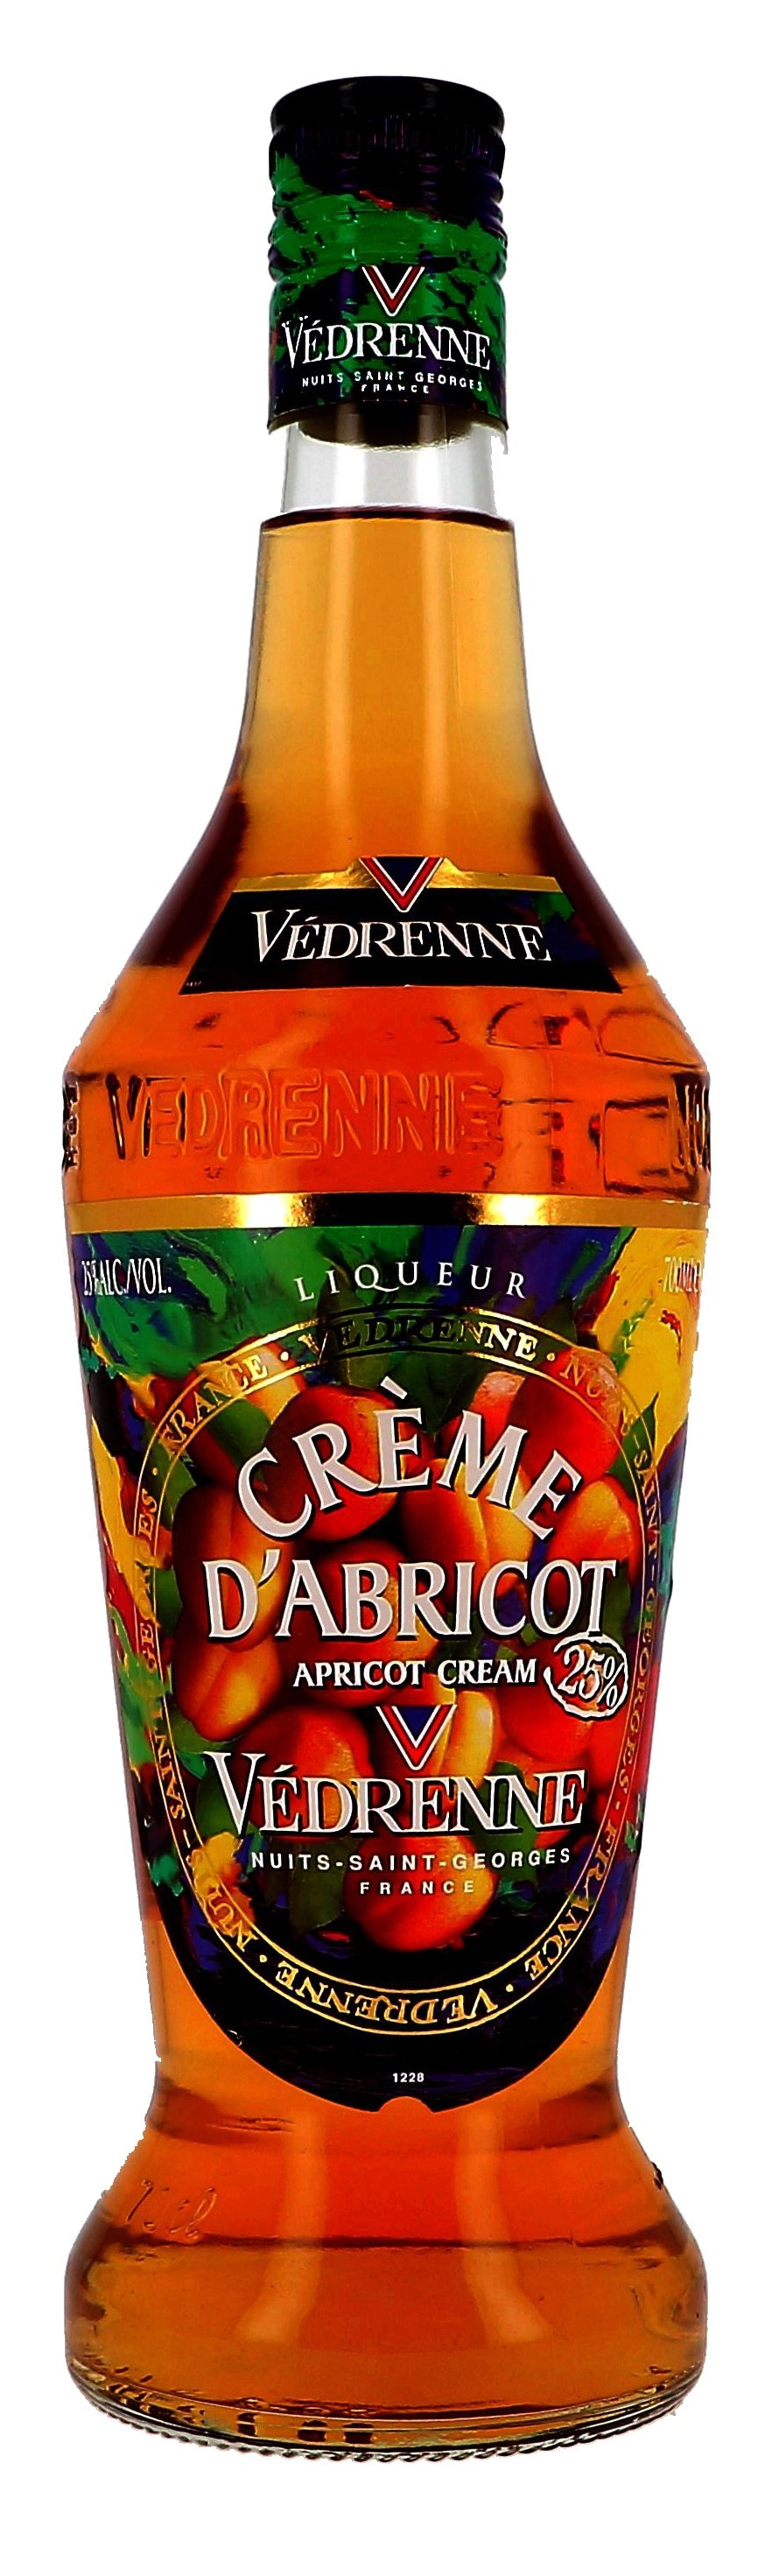 Vedrenne Creme d'Abricot 70cl 25% (Likeuren)